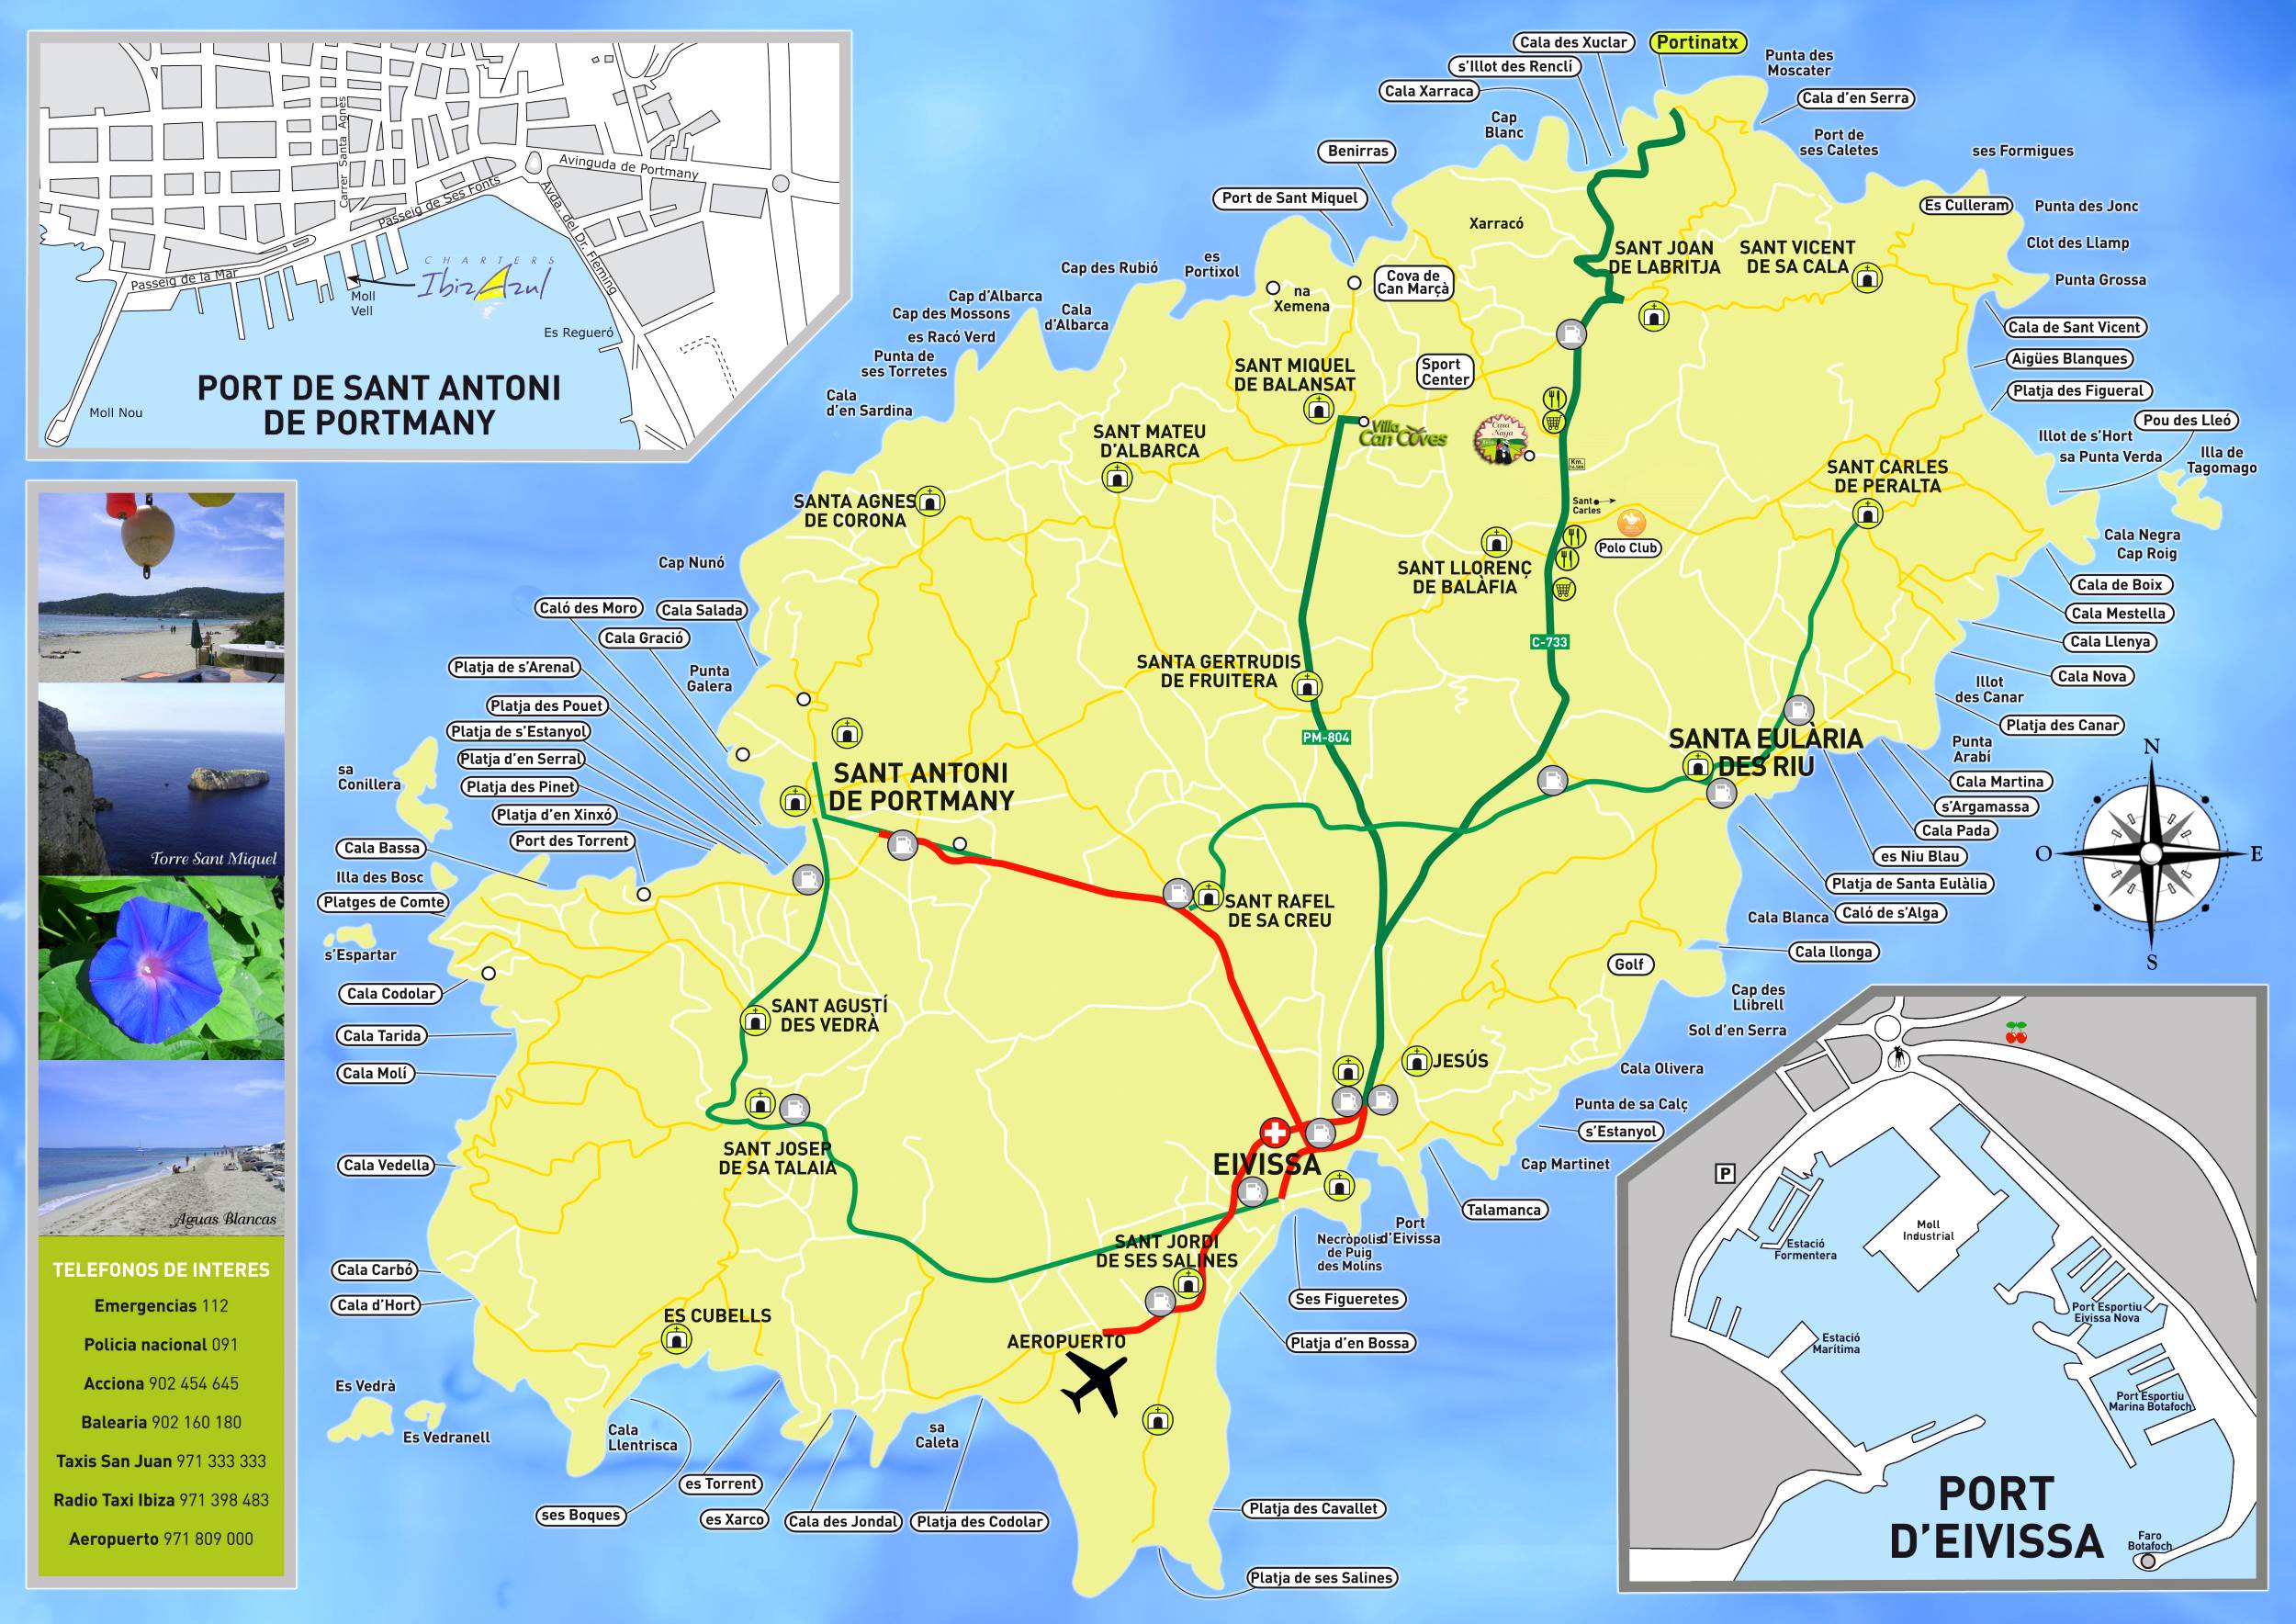 Ibiza sights on the island map